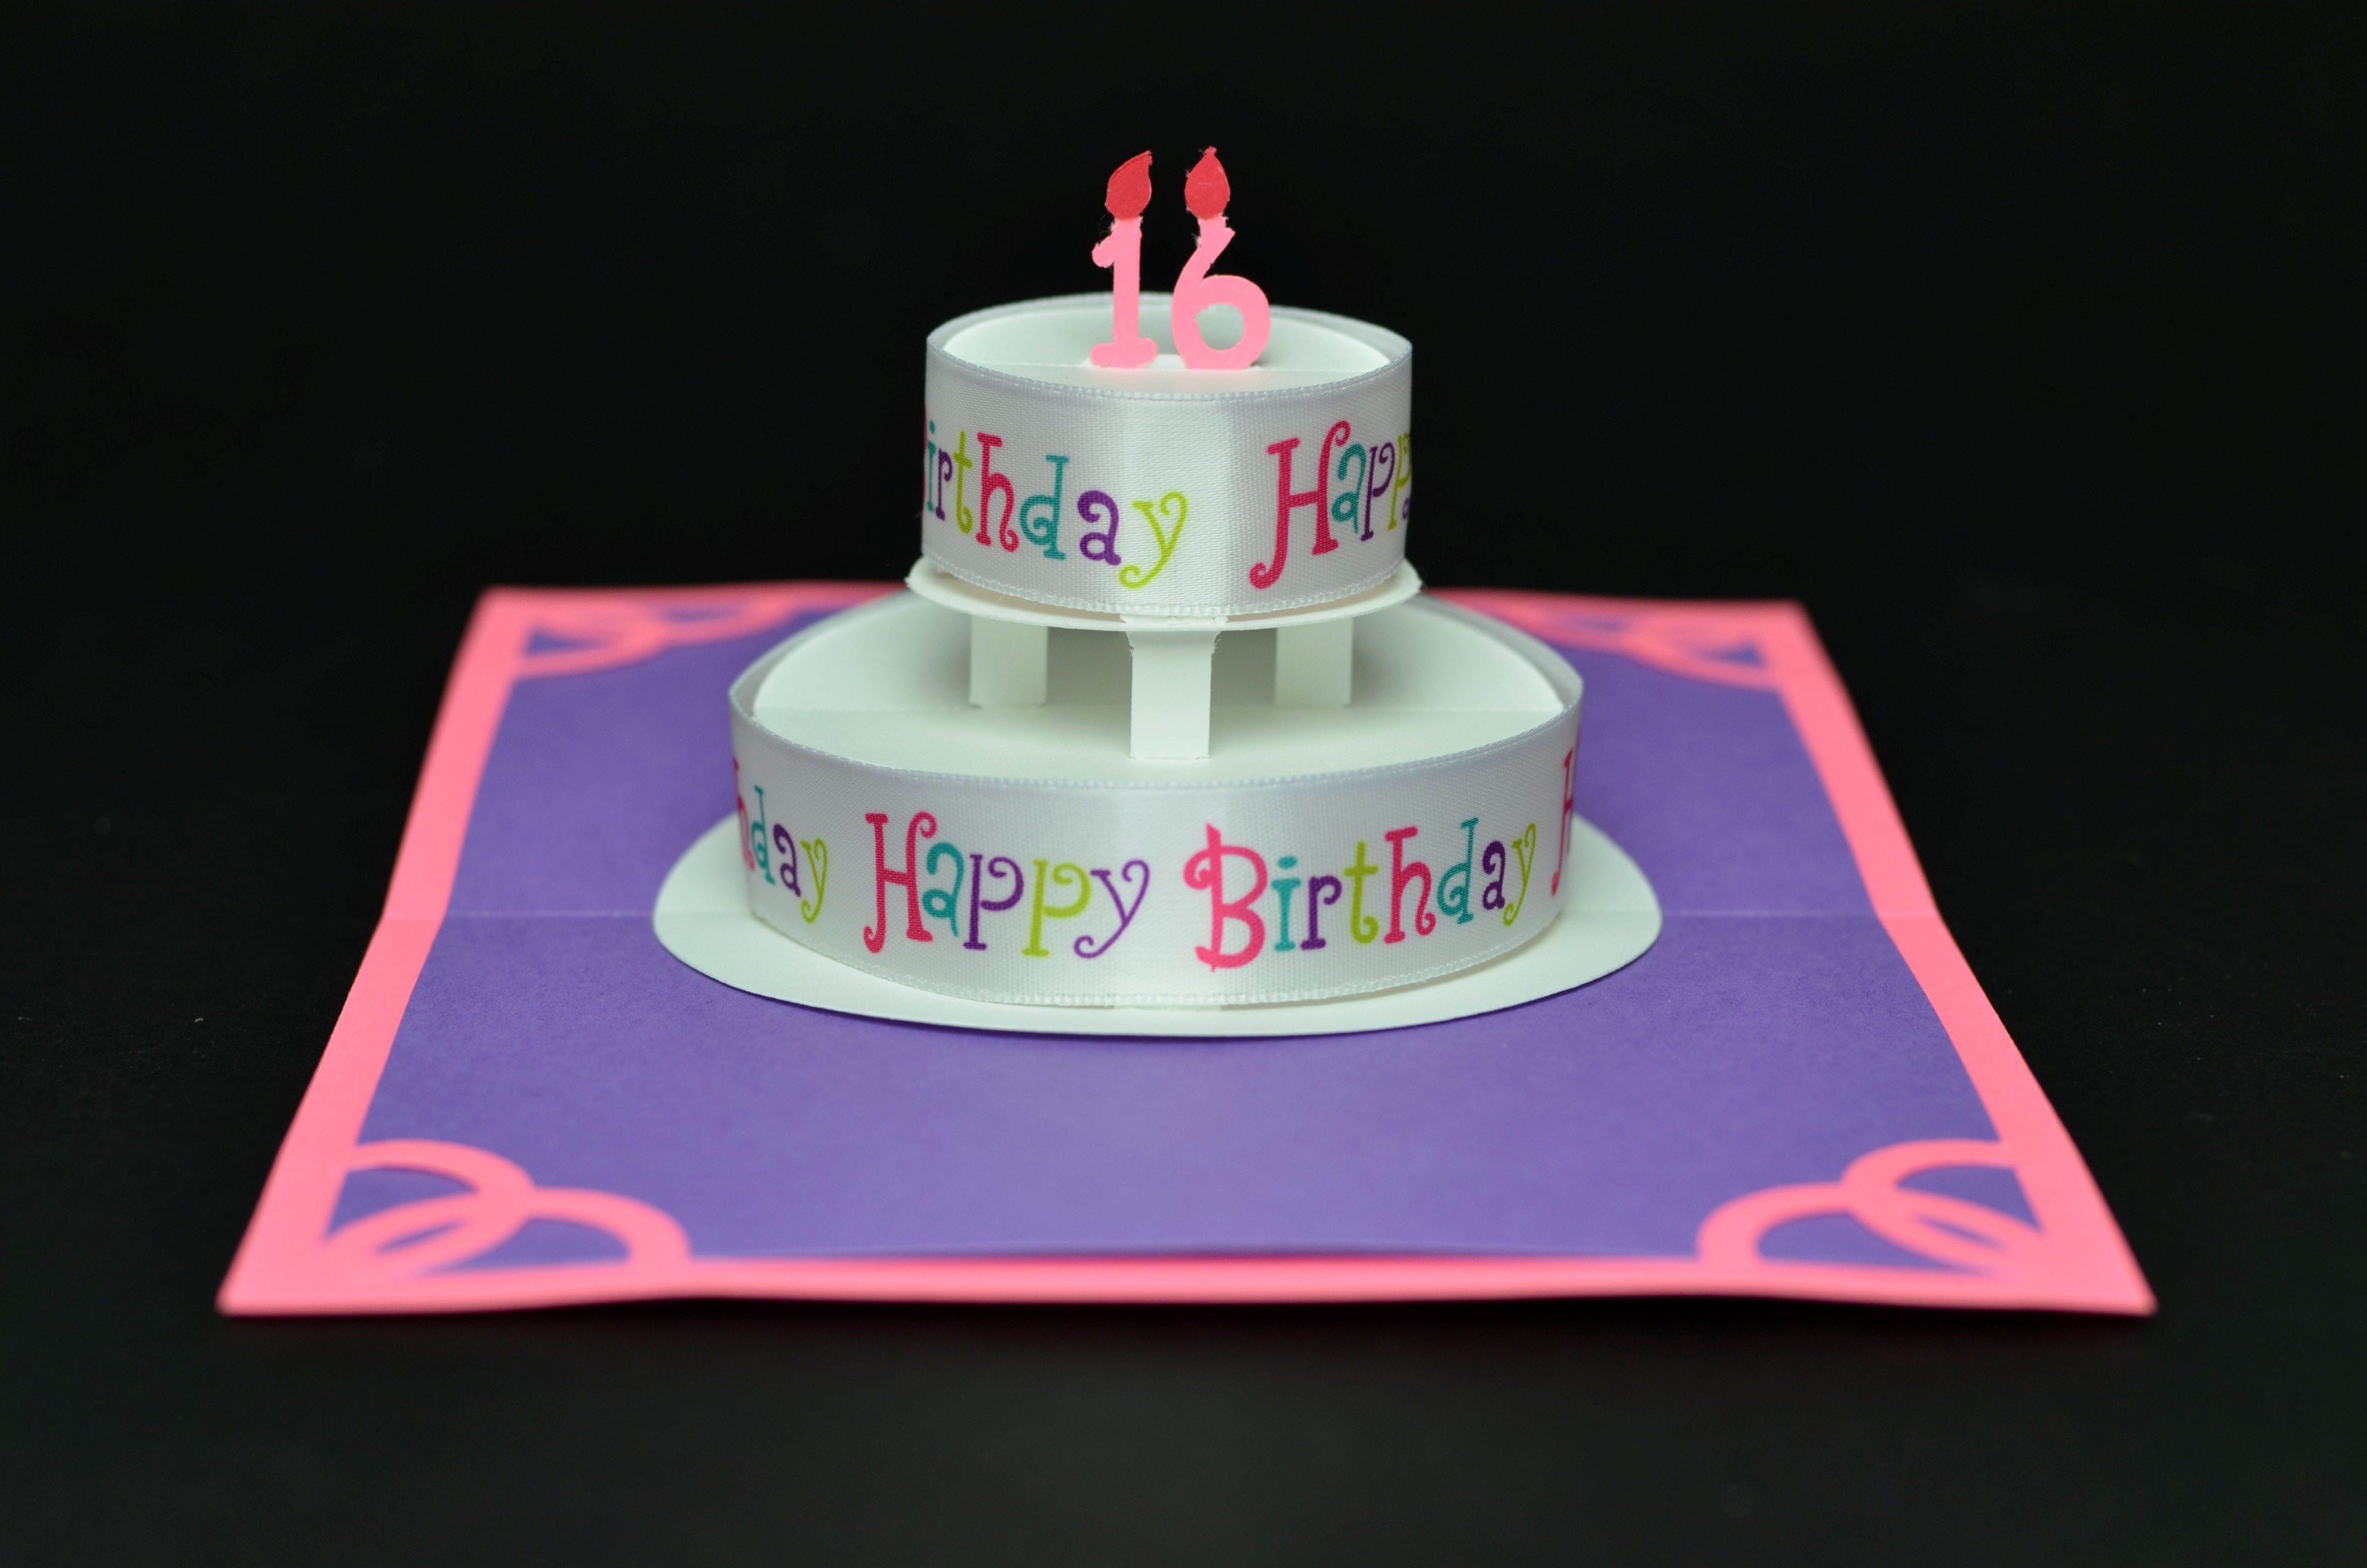 Birthday Cake Pop Up Card
 Round Birthday Cake Pop Up Card With "Happy Birthday